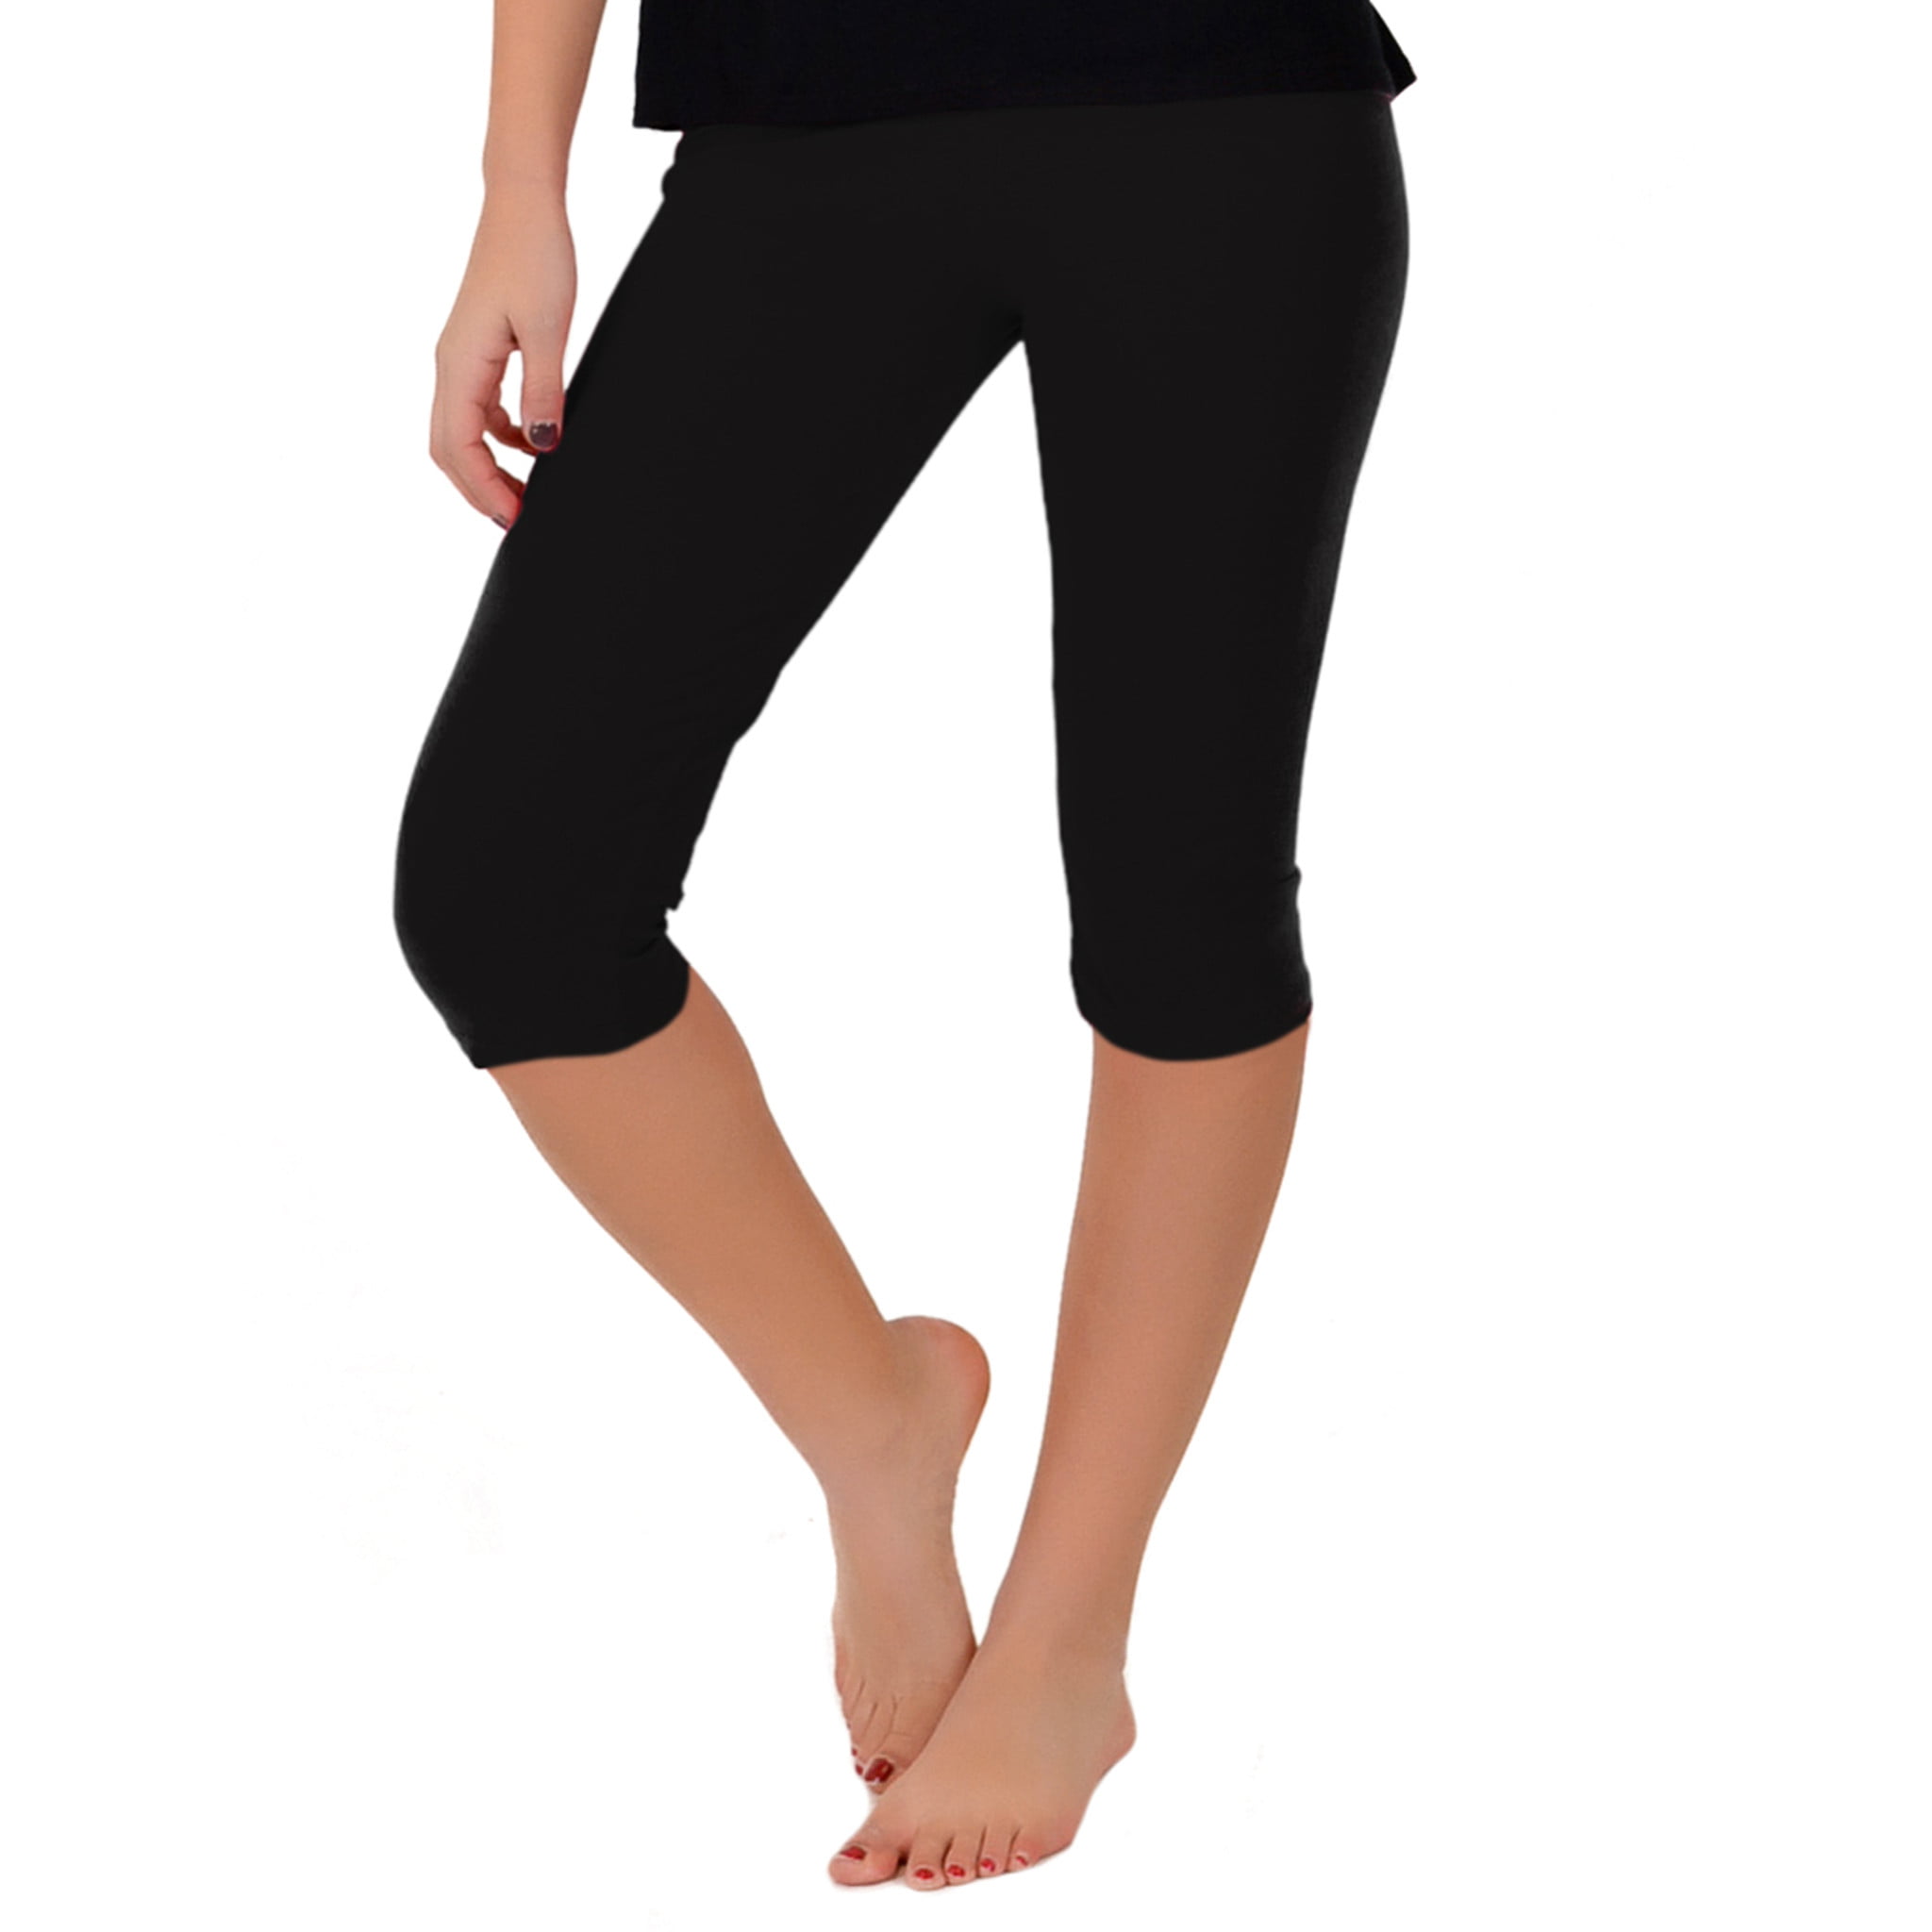 Zinmore Women's Knee Length Tights Yoga Shorts Workout Pants